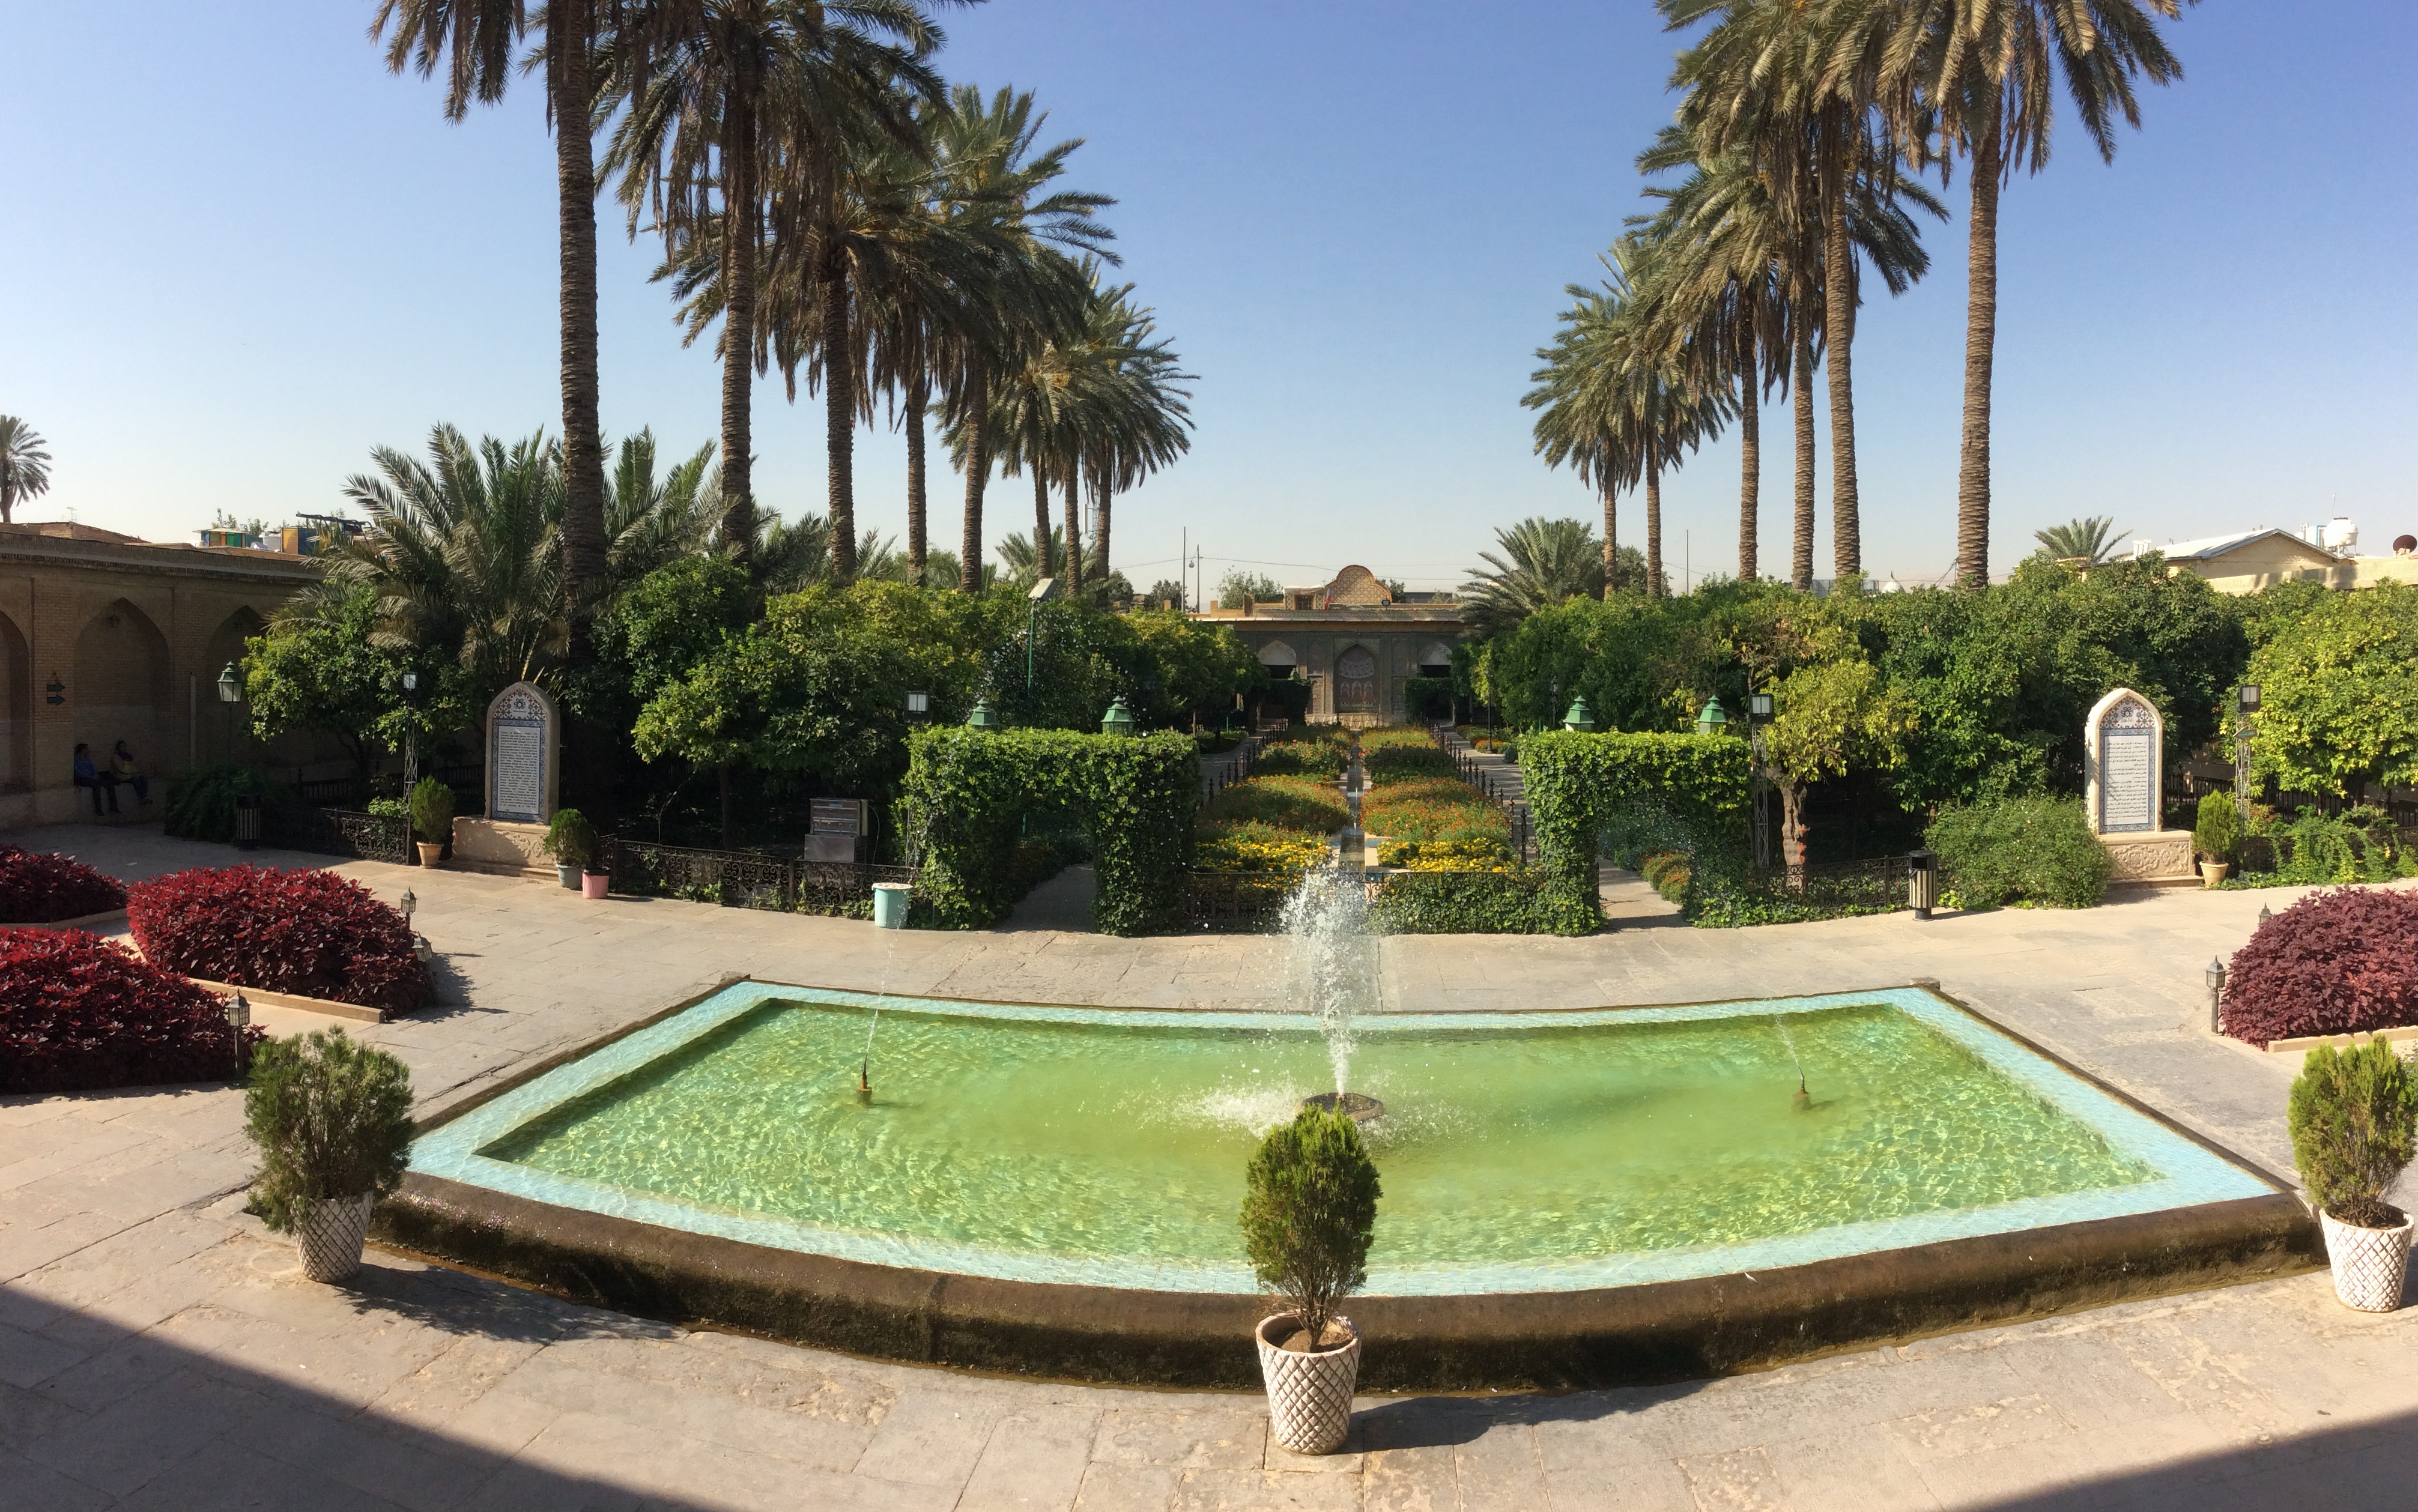  UNESCO gardens in Shiraz
